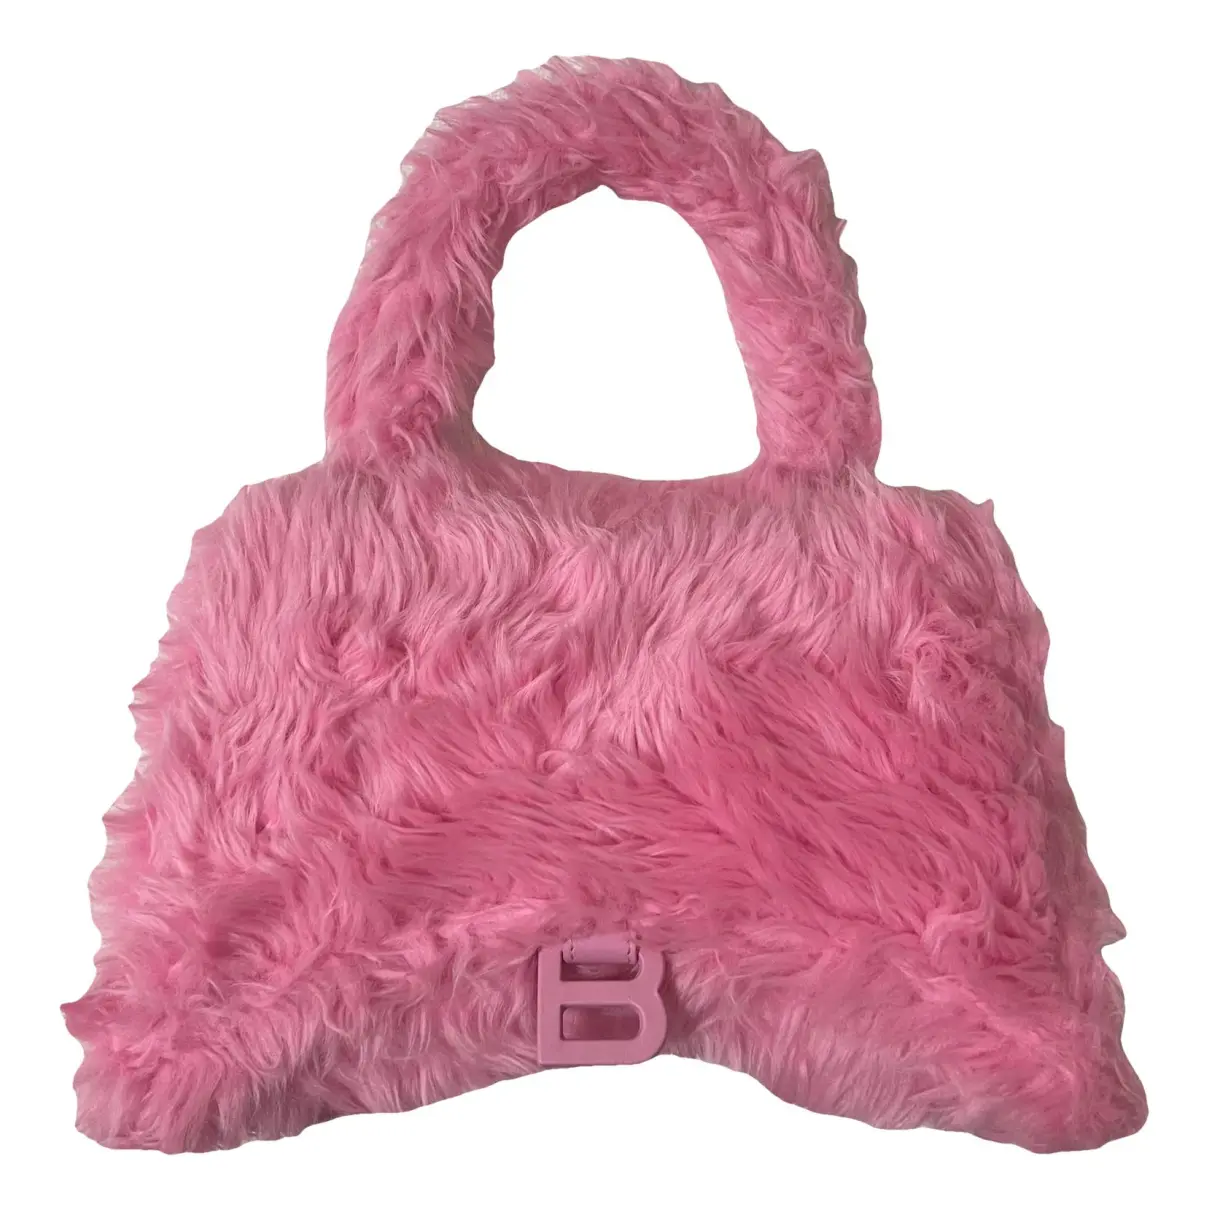 Hourglass faux fur handbag